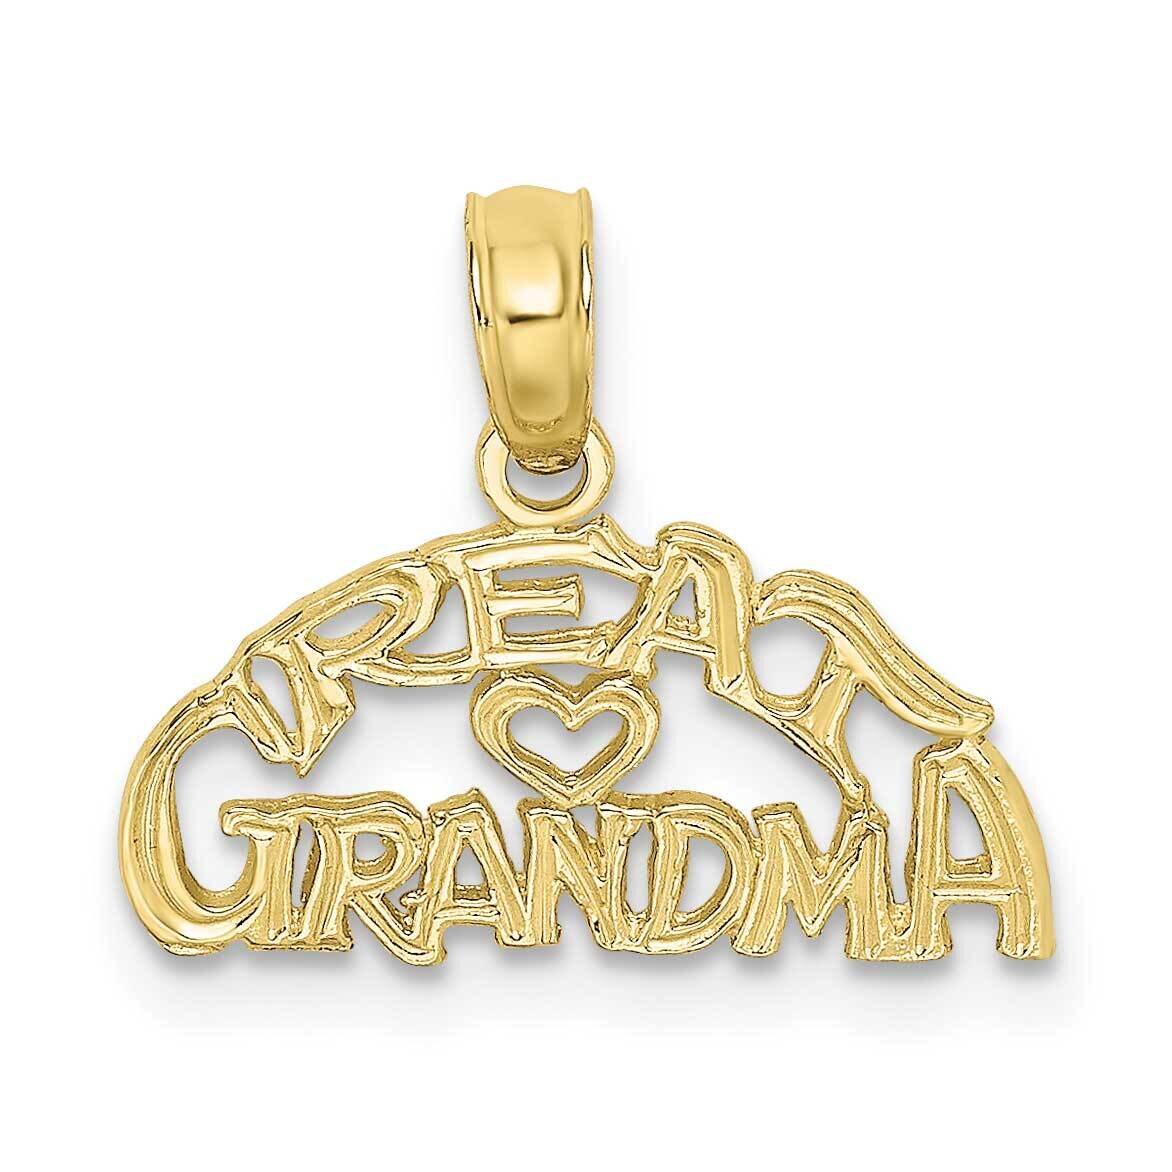 Block and Engraved Great Grandma Charm 10k Gold 10K8905